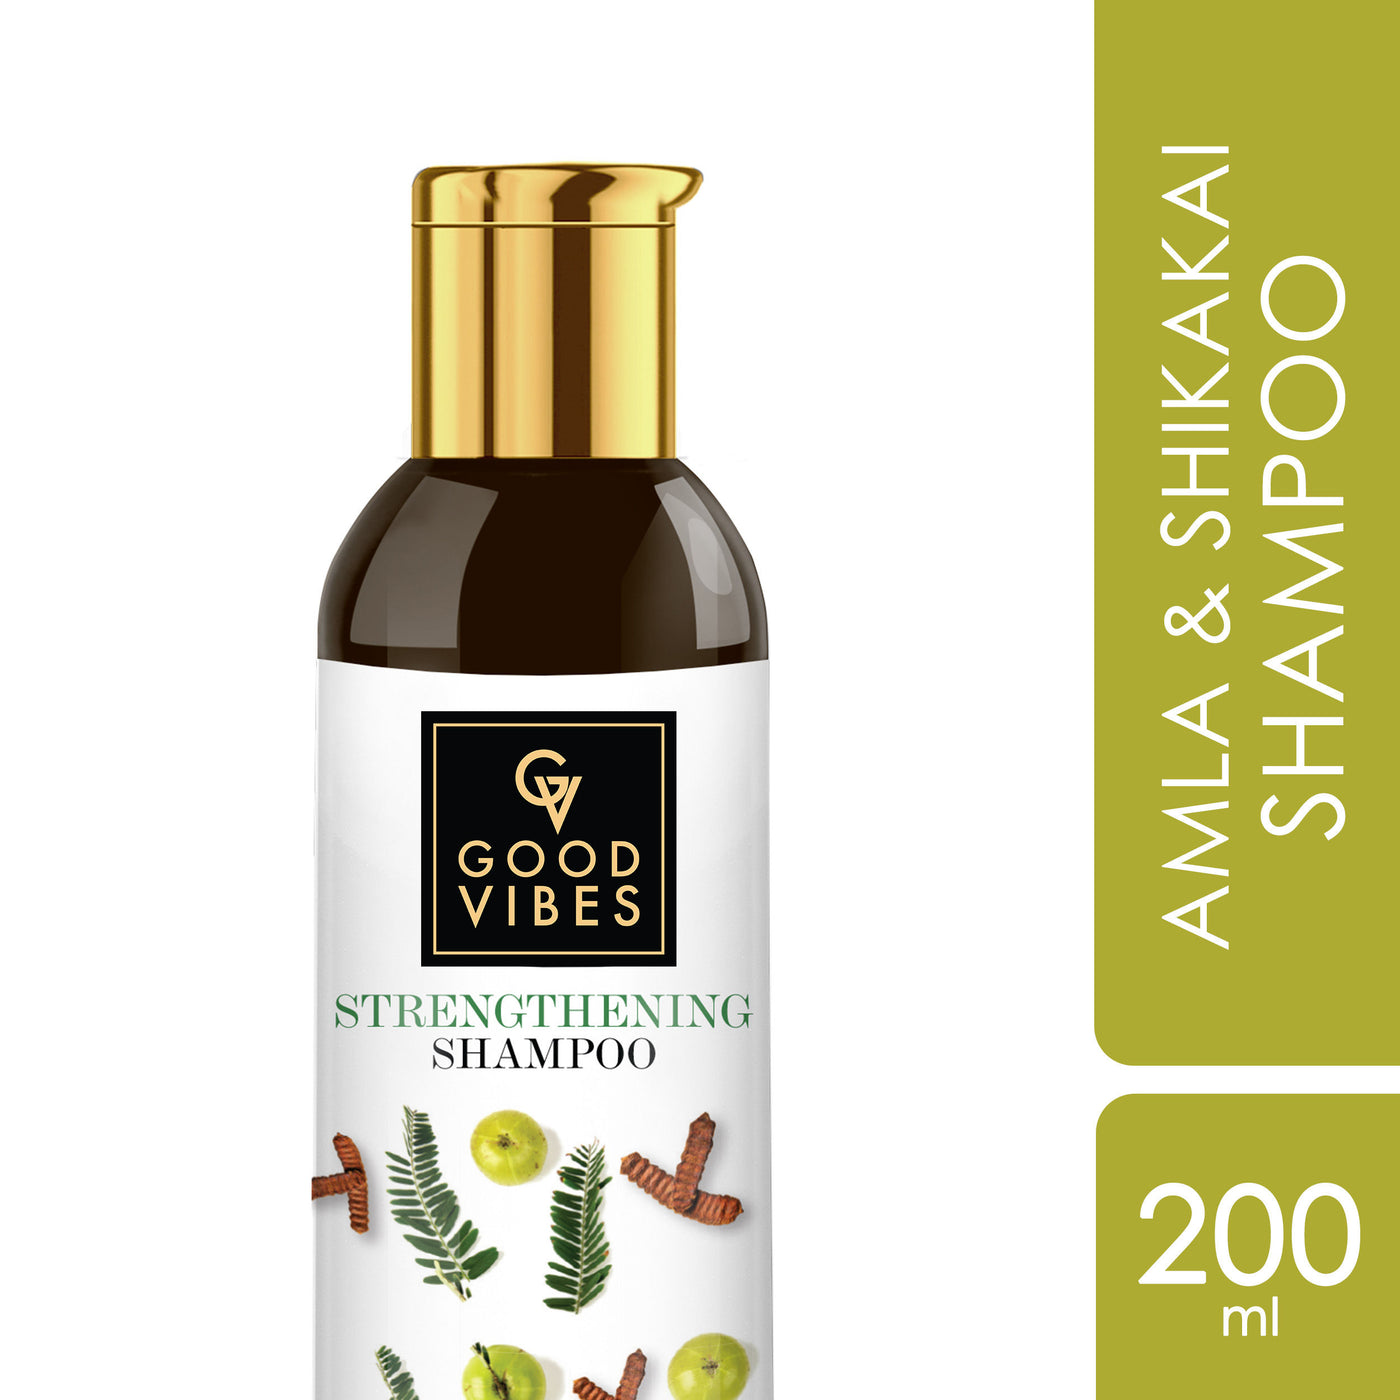 good-vibes-strengthening-shampoo-amla-shikakai-200-ml-2-19-12-1